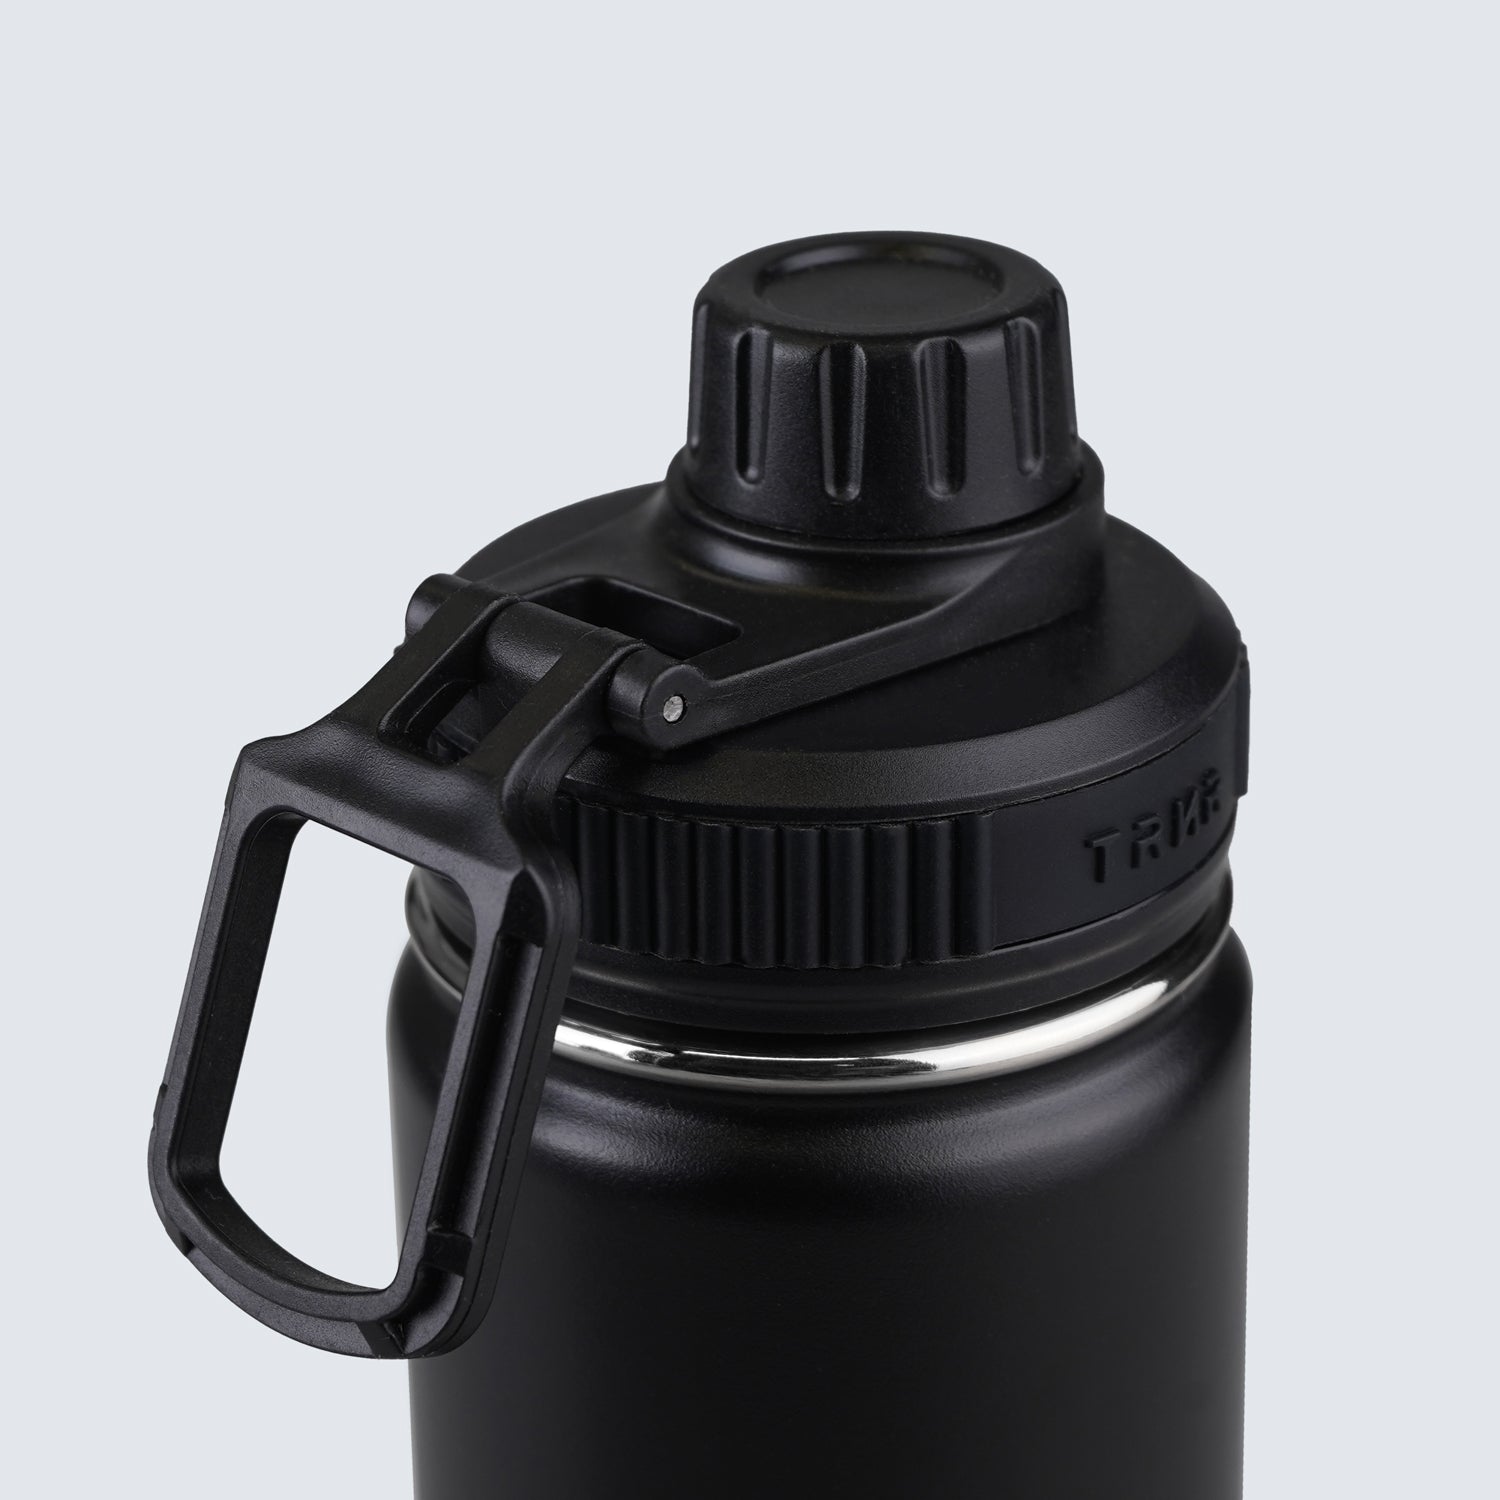 TRNR Studio Bottle 7100 ml capacity (Black) |  Lid Photo Featuring Easy-Grip Handle and Screw Top